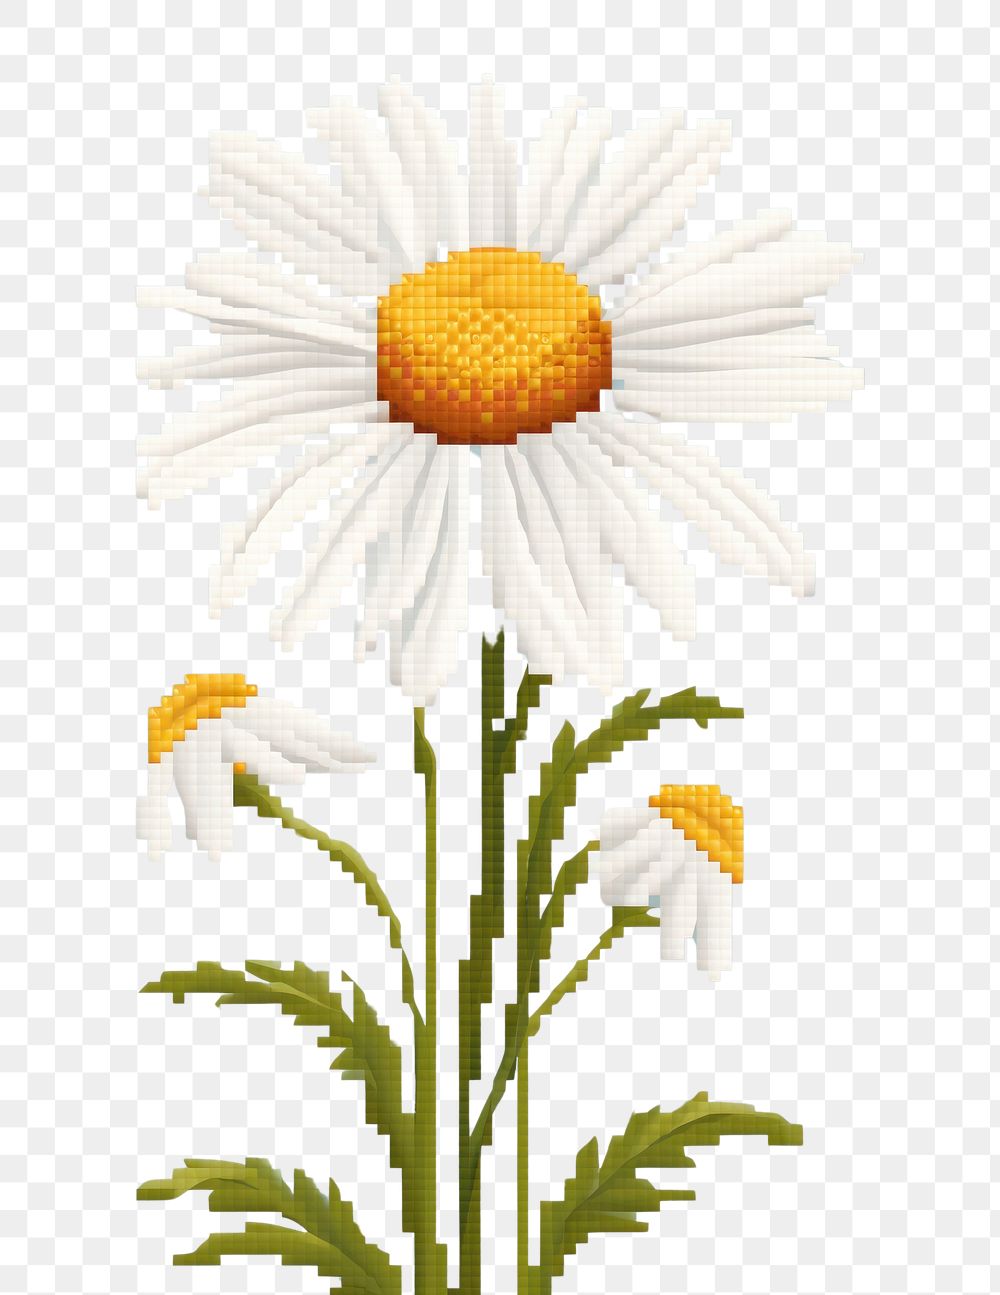 Cross stitch chamomile flower daisy plant.